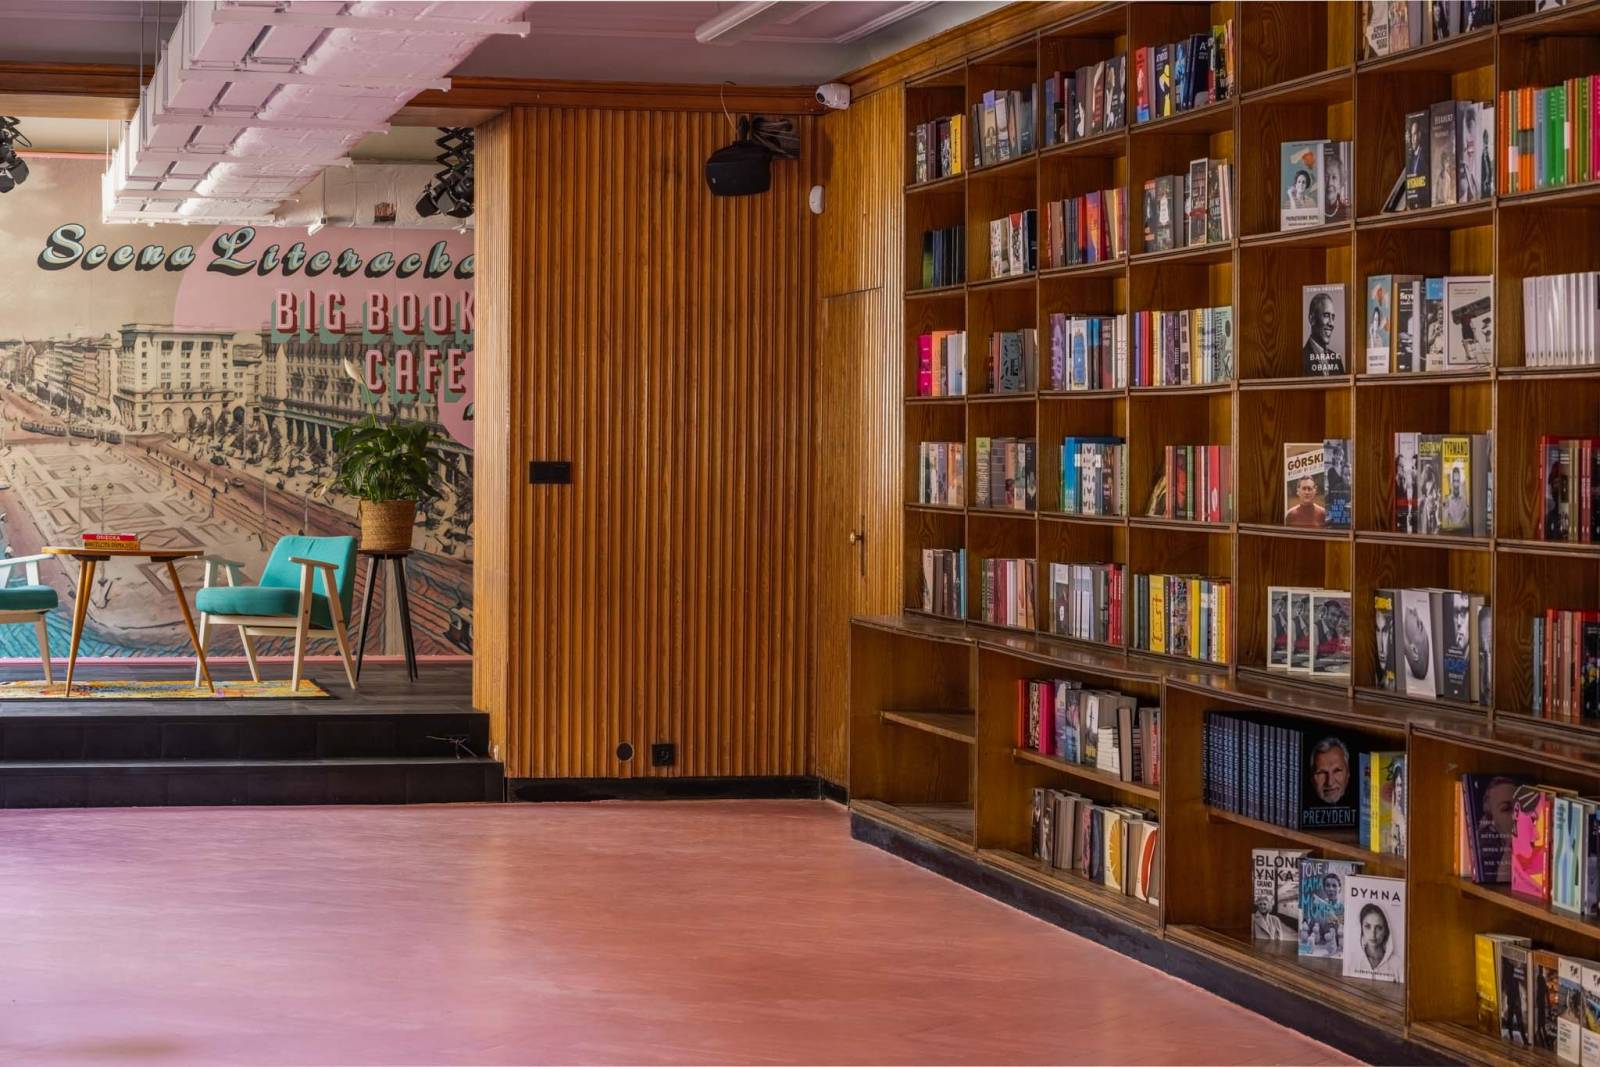 Big Book Cafe (Fot. w_srodku)